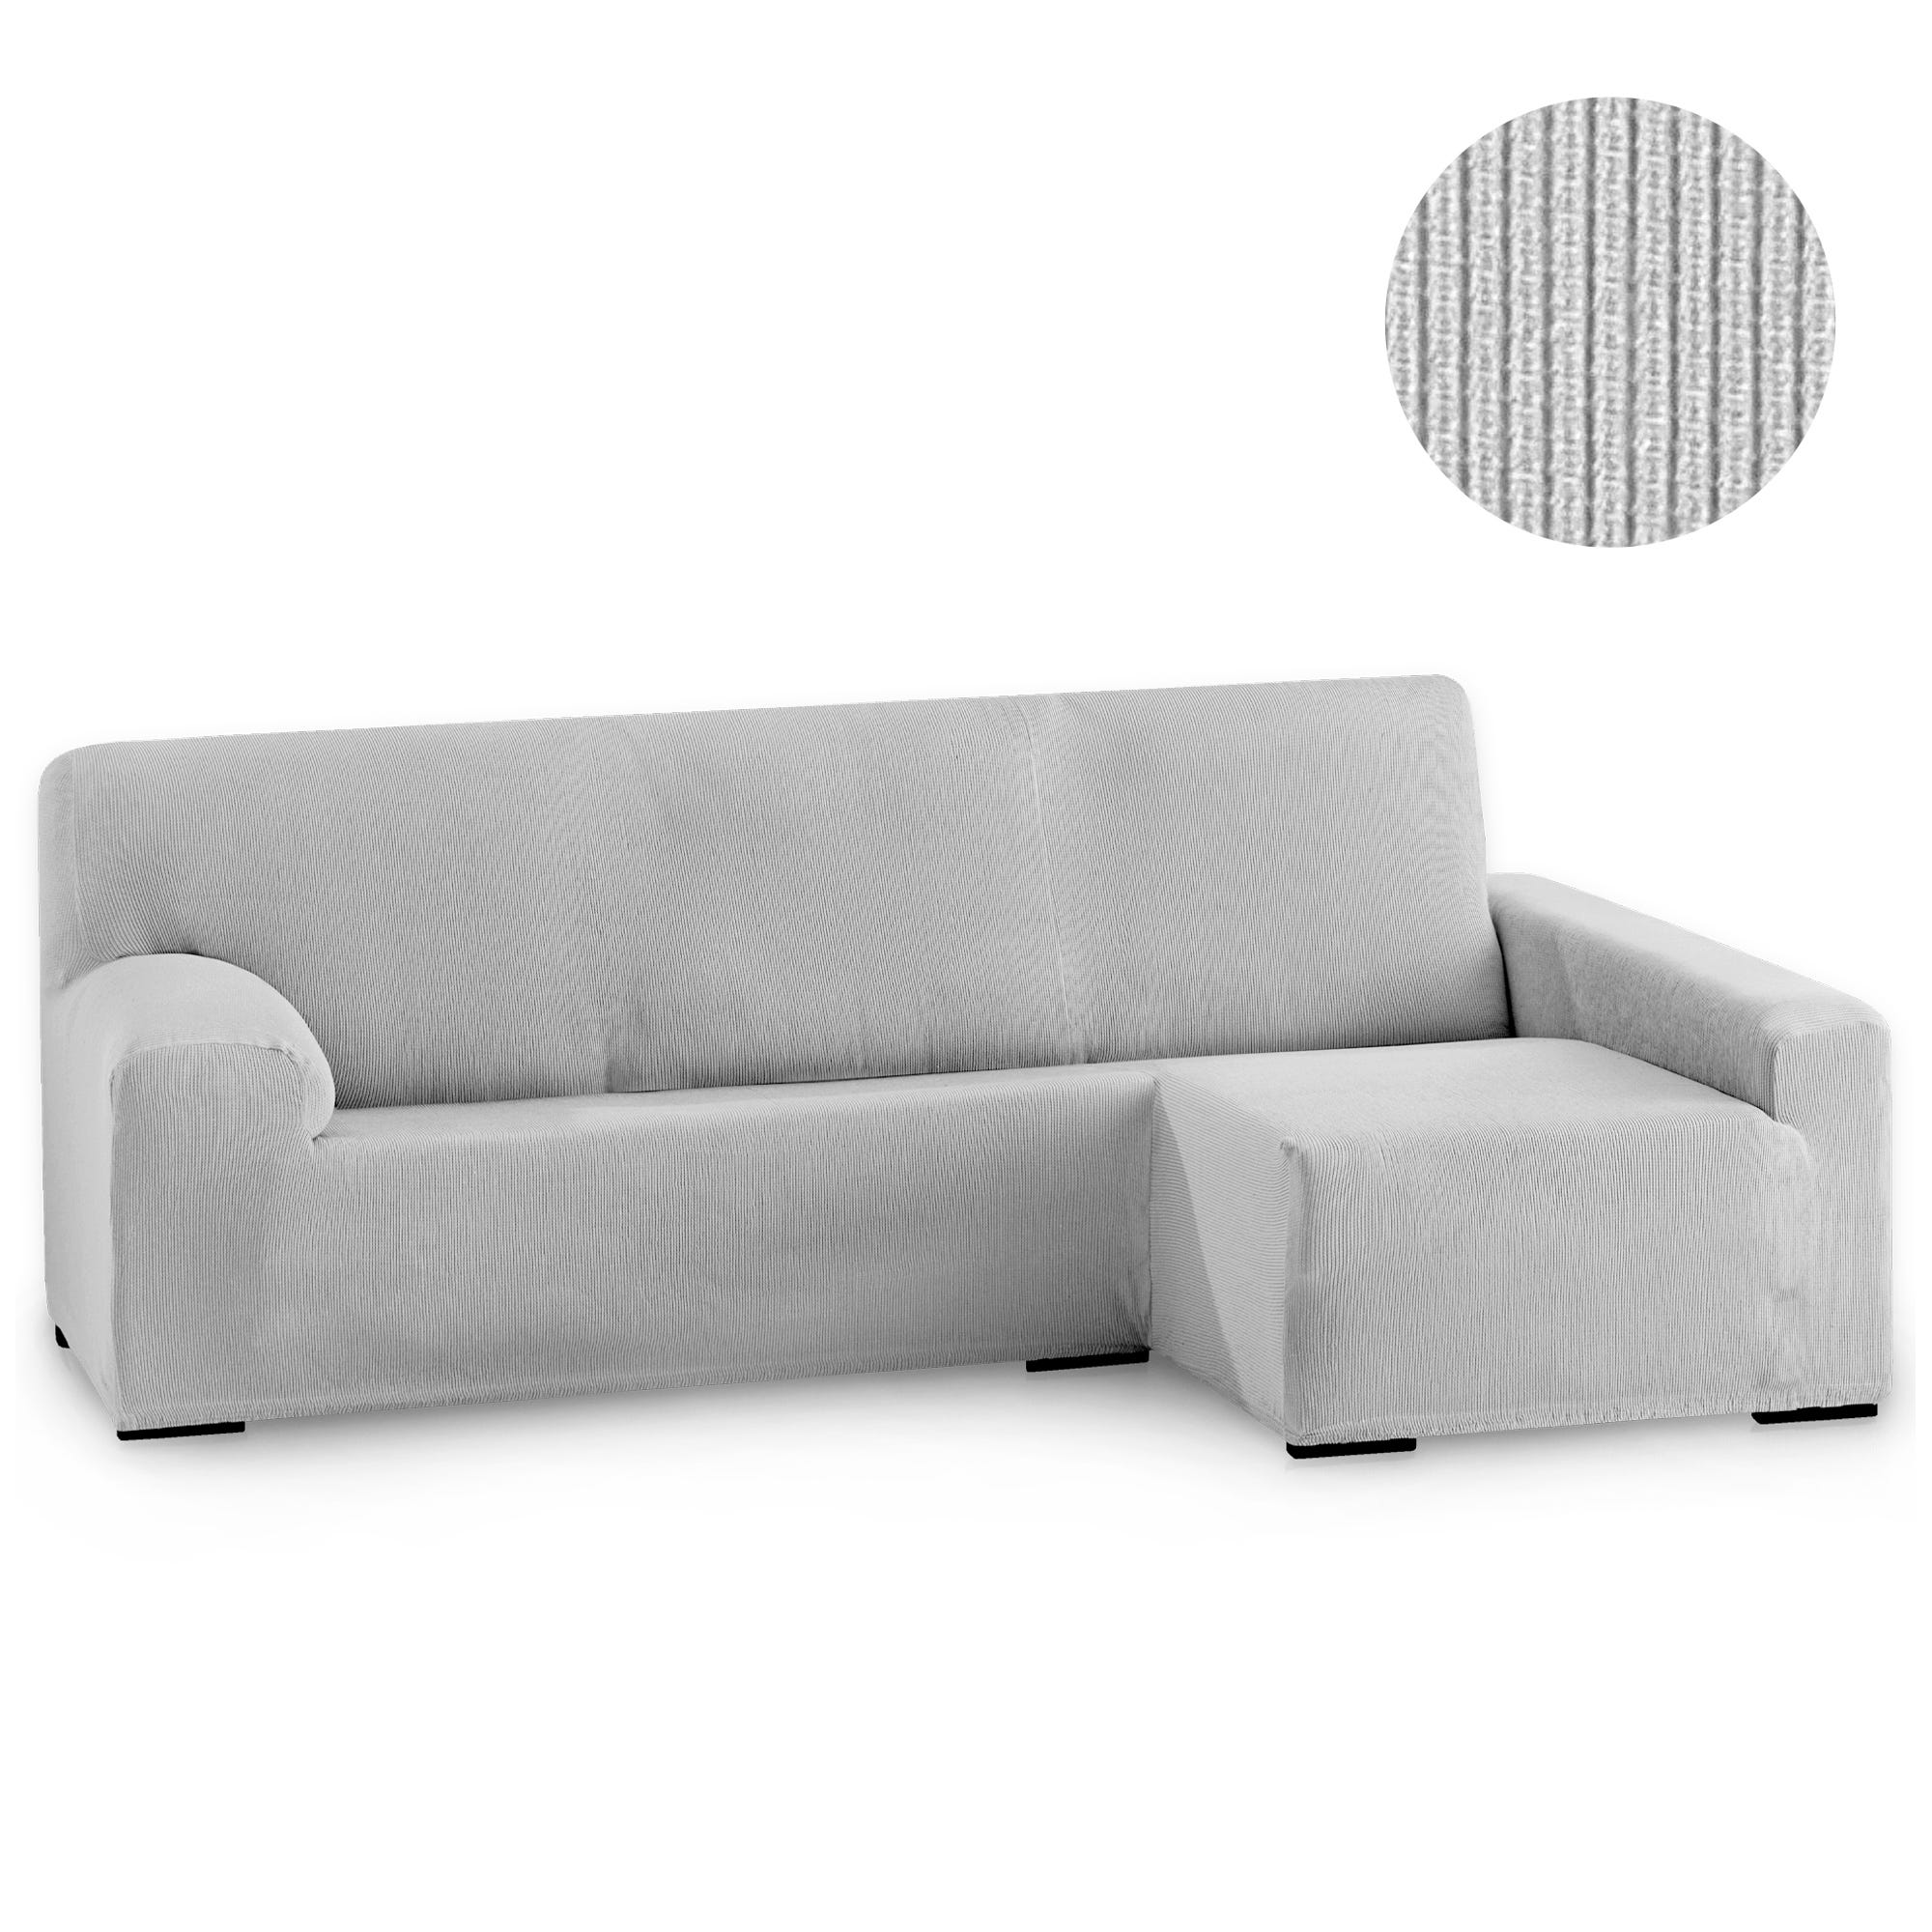 Funda sofa chaise longue